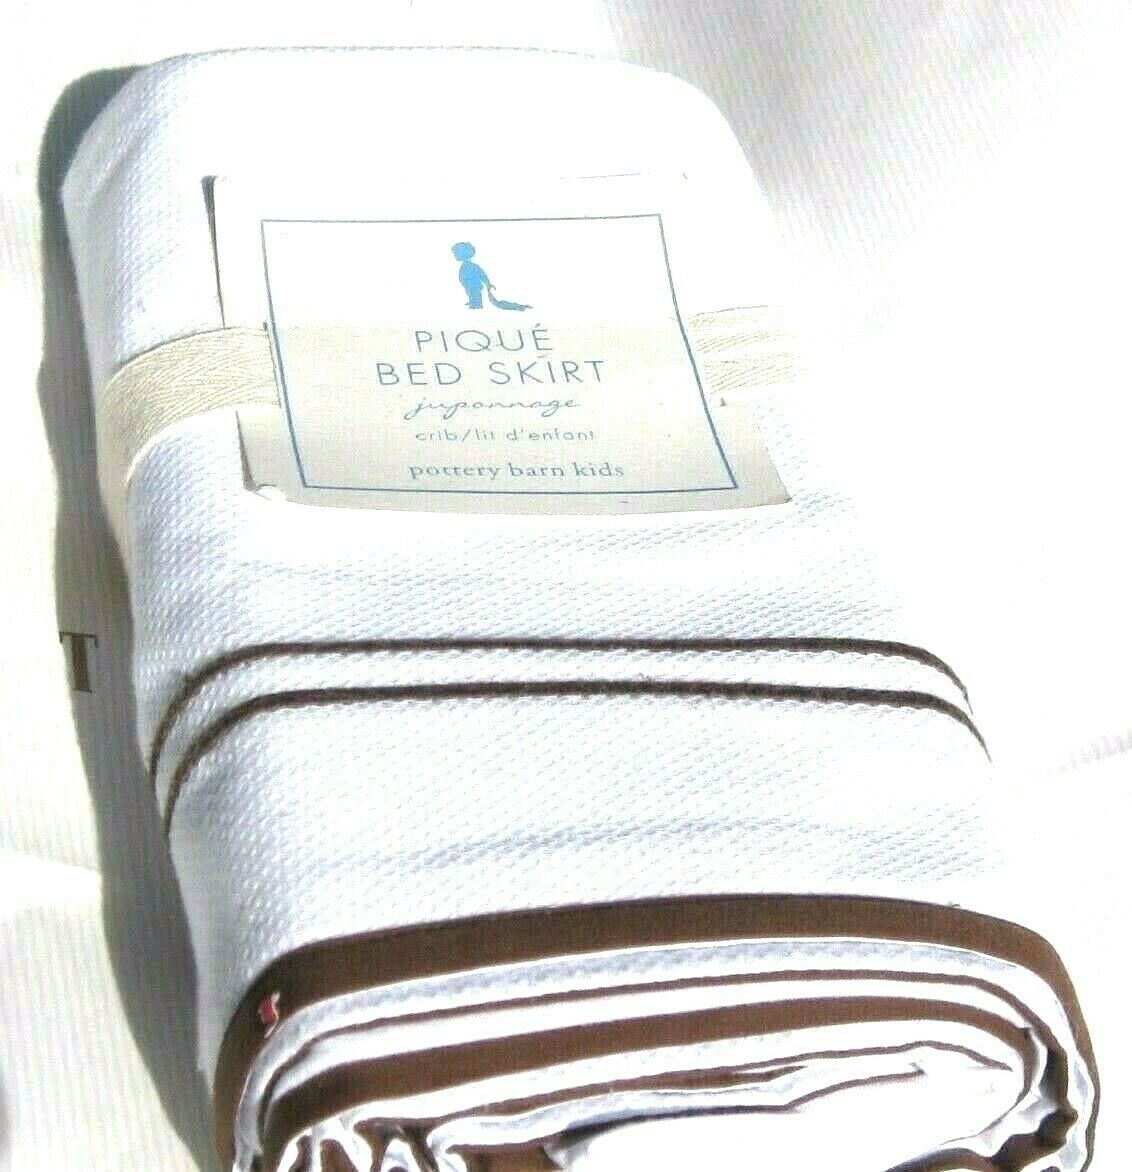 POTTERY BARN KIDs Baby Crib Bed Skirt Pique Nursery White Brown  $59.00 Bedskirt - $29.67